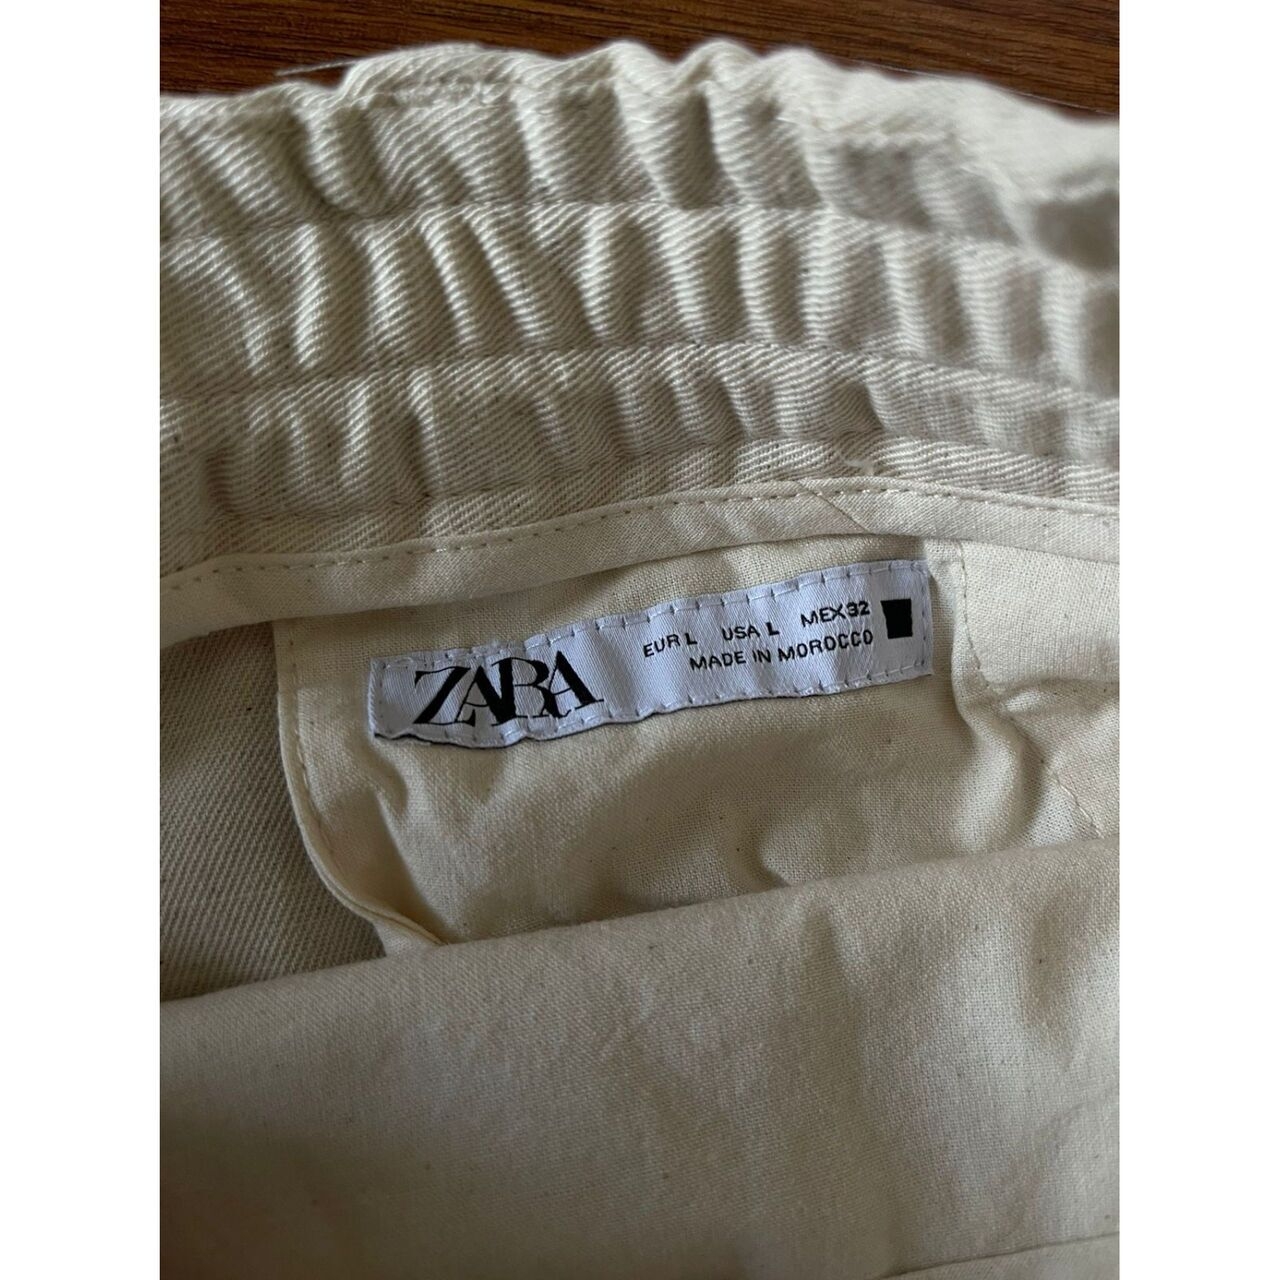 Zara Light Beige Cargo Short Pants